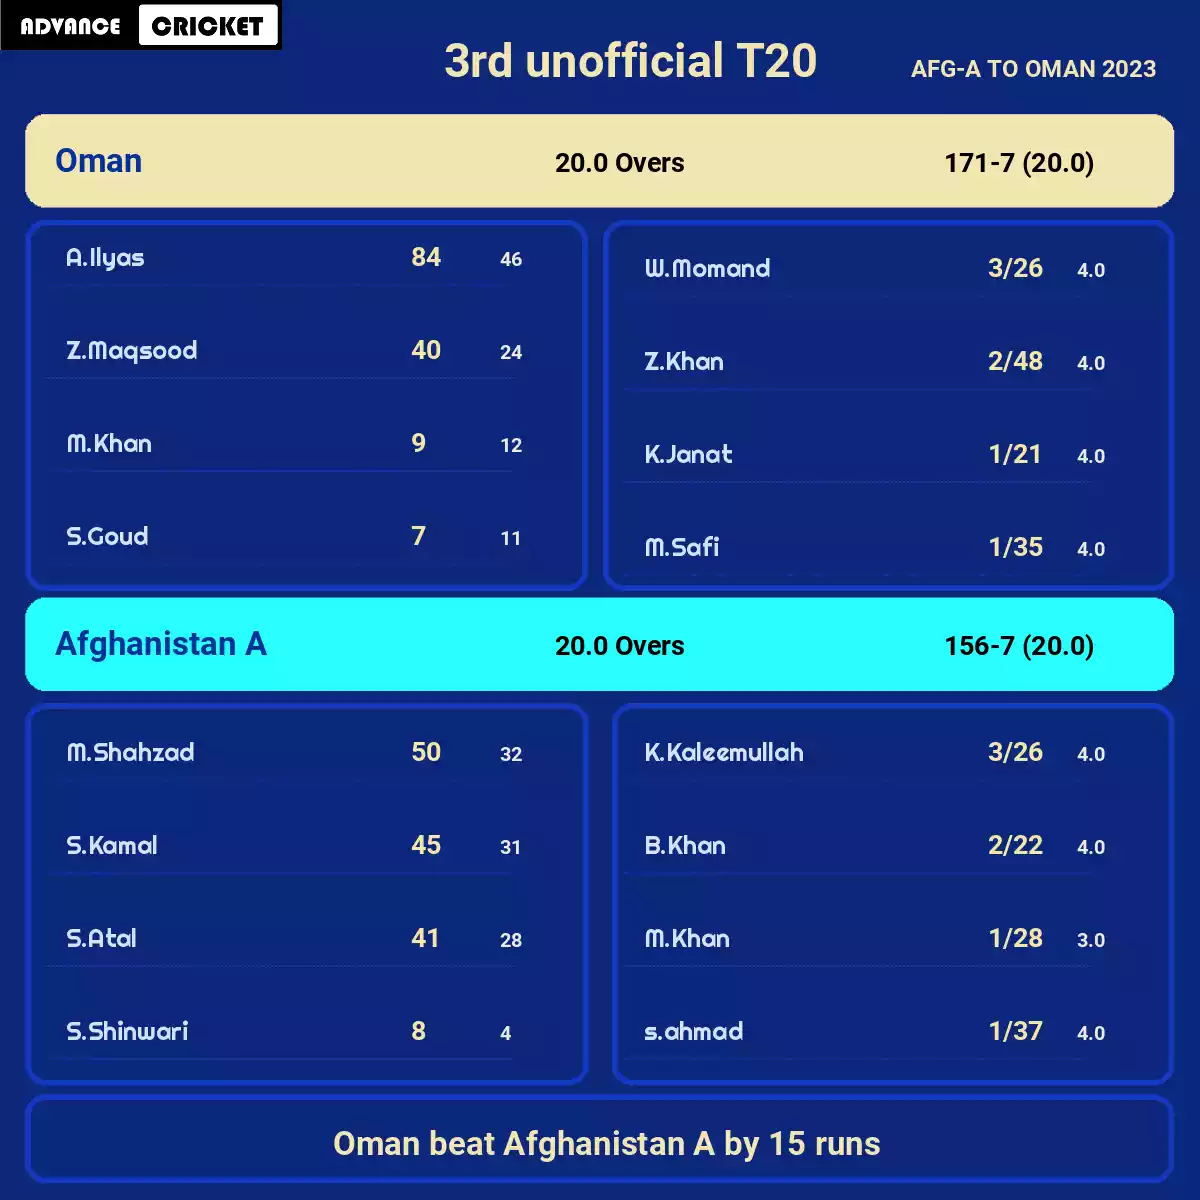 OMN vs AF-A 3rd unofficial T20 AFG-A TO OMAN 2023